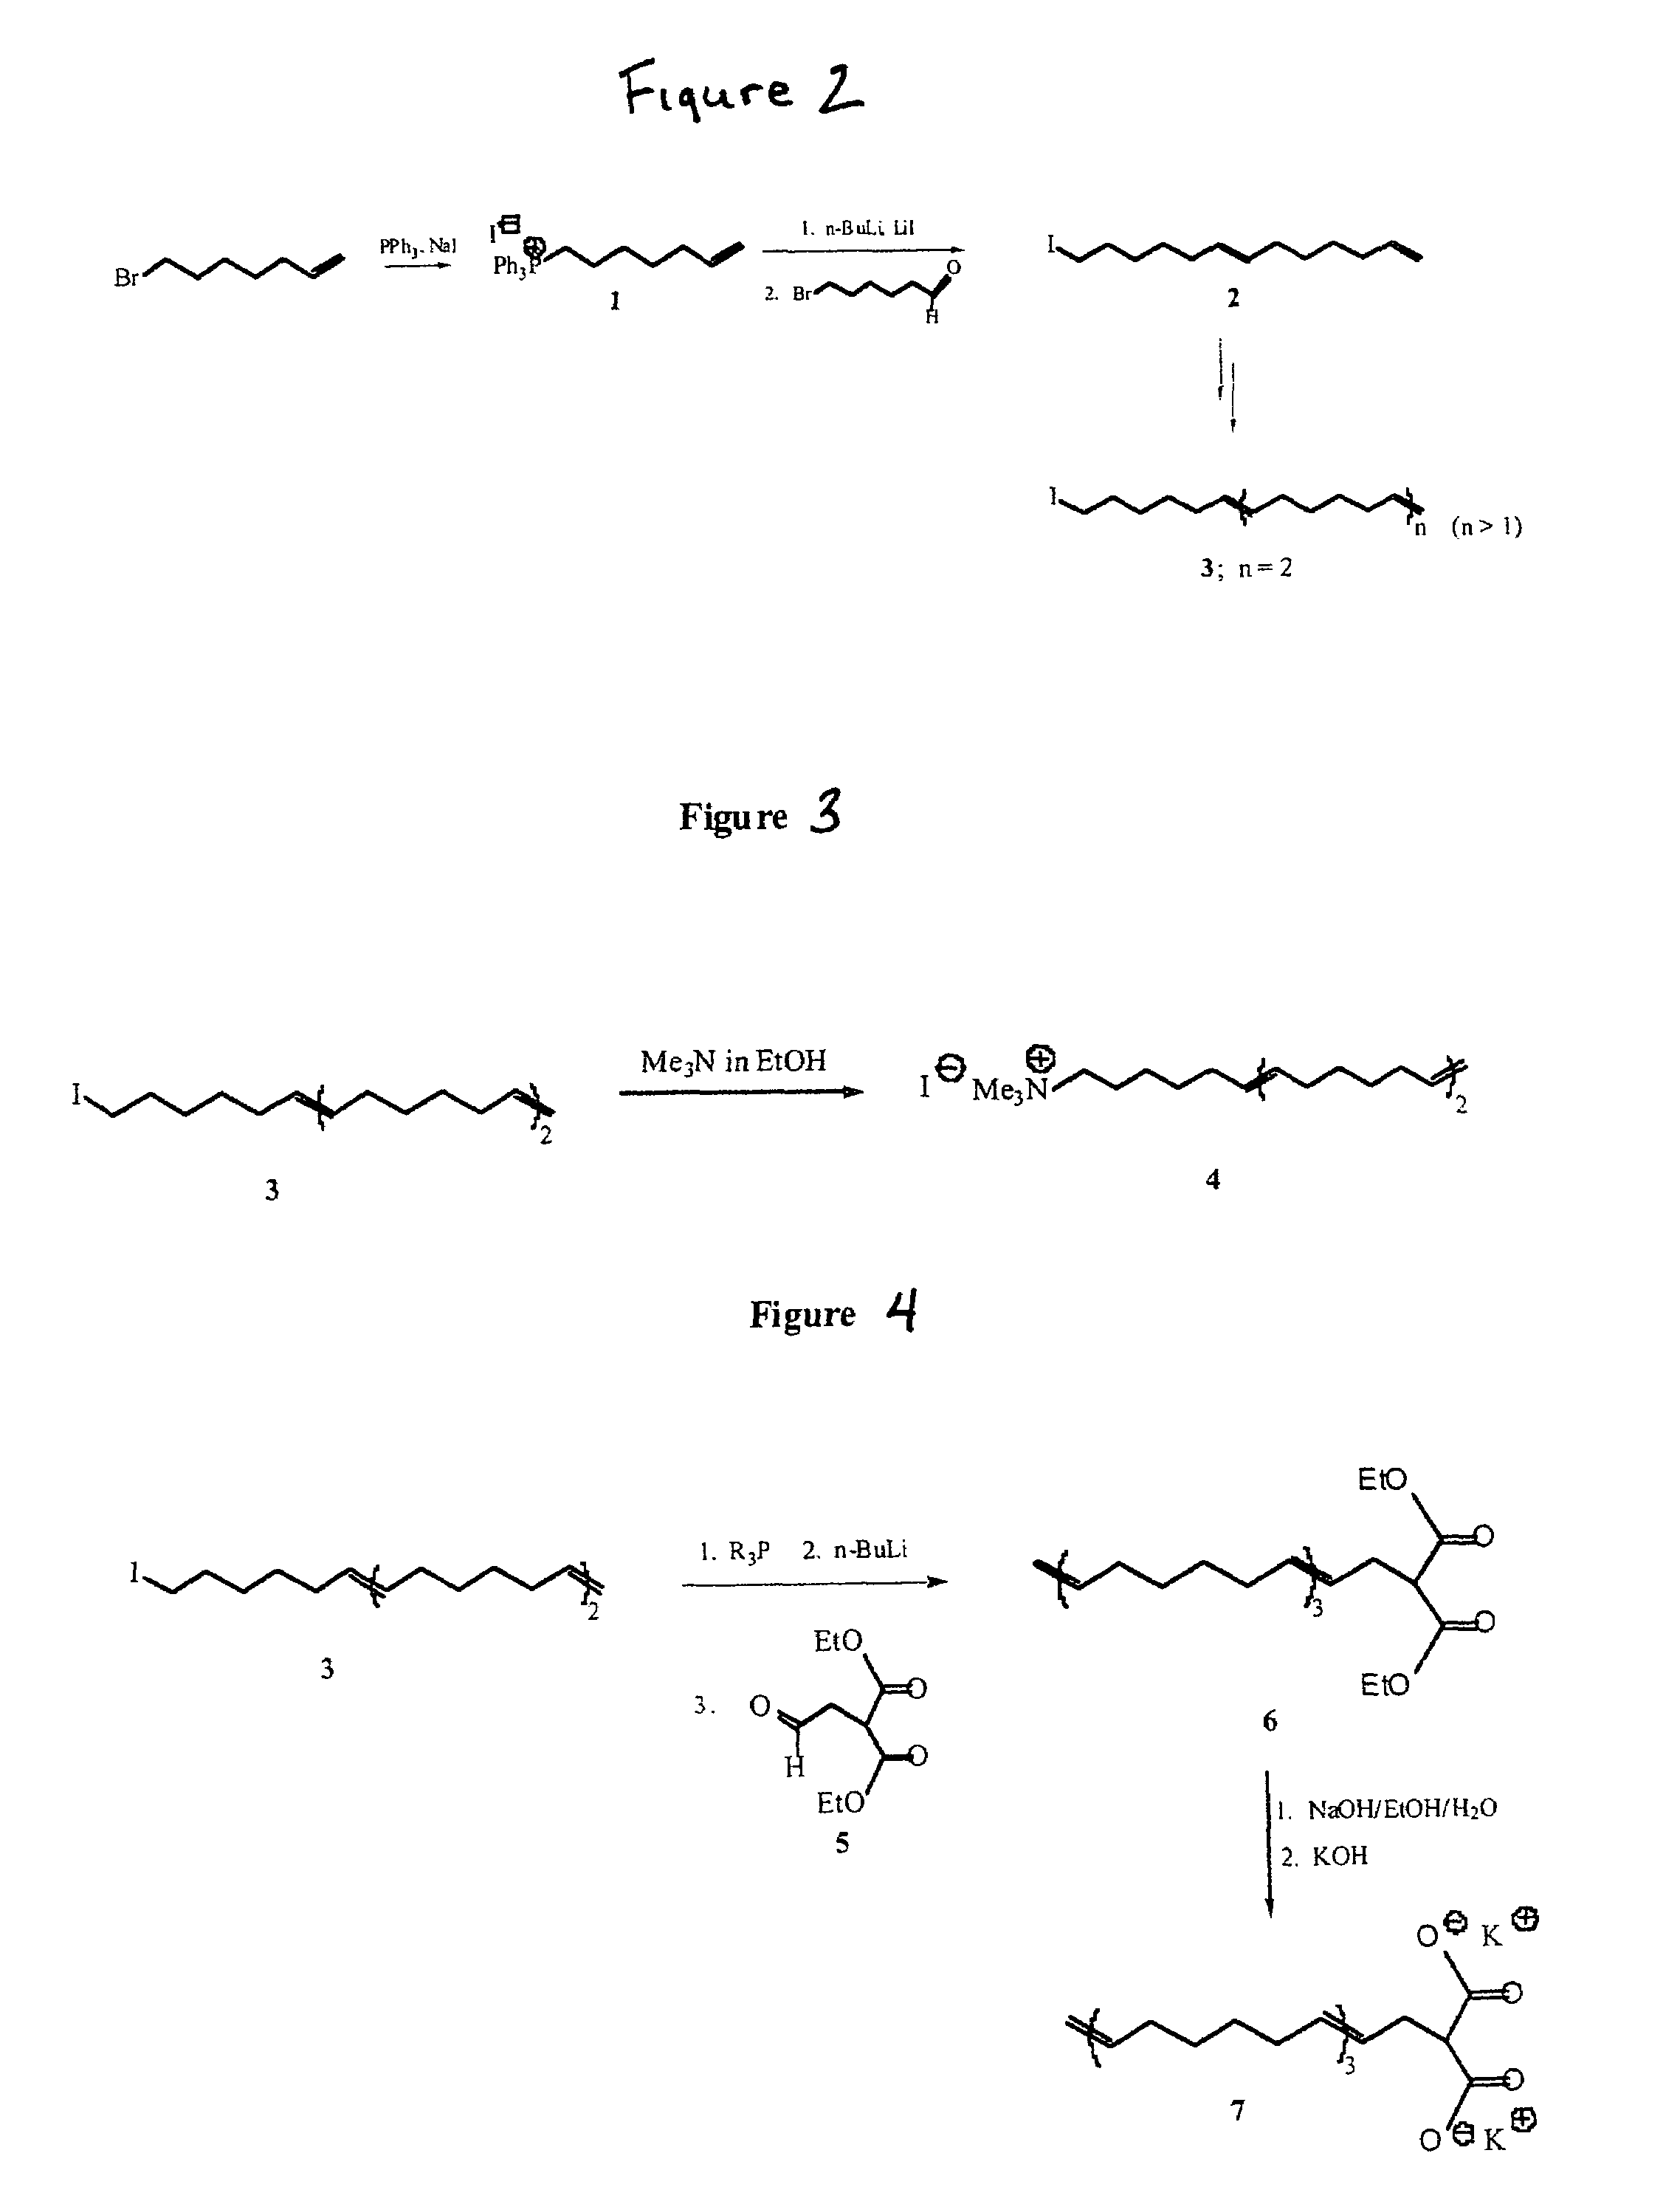 Metathesis depolymerizable surfactants